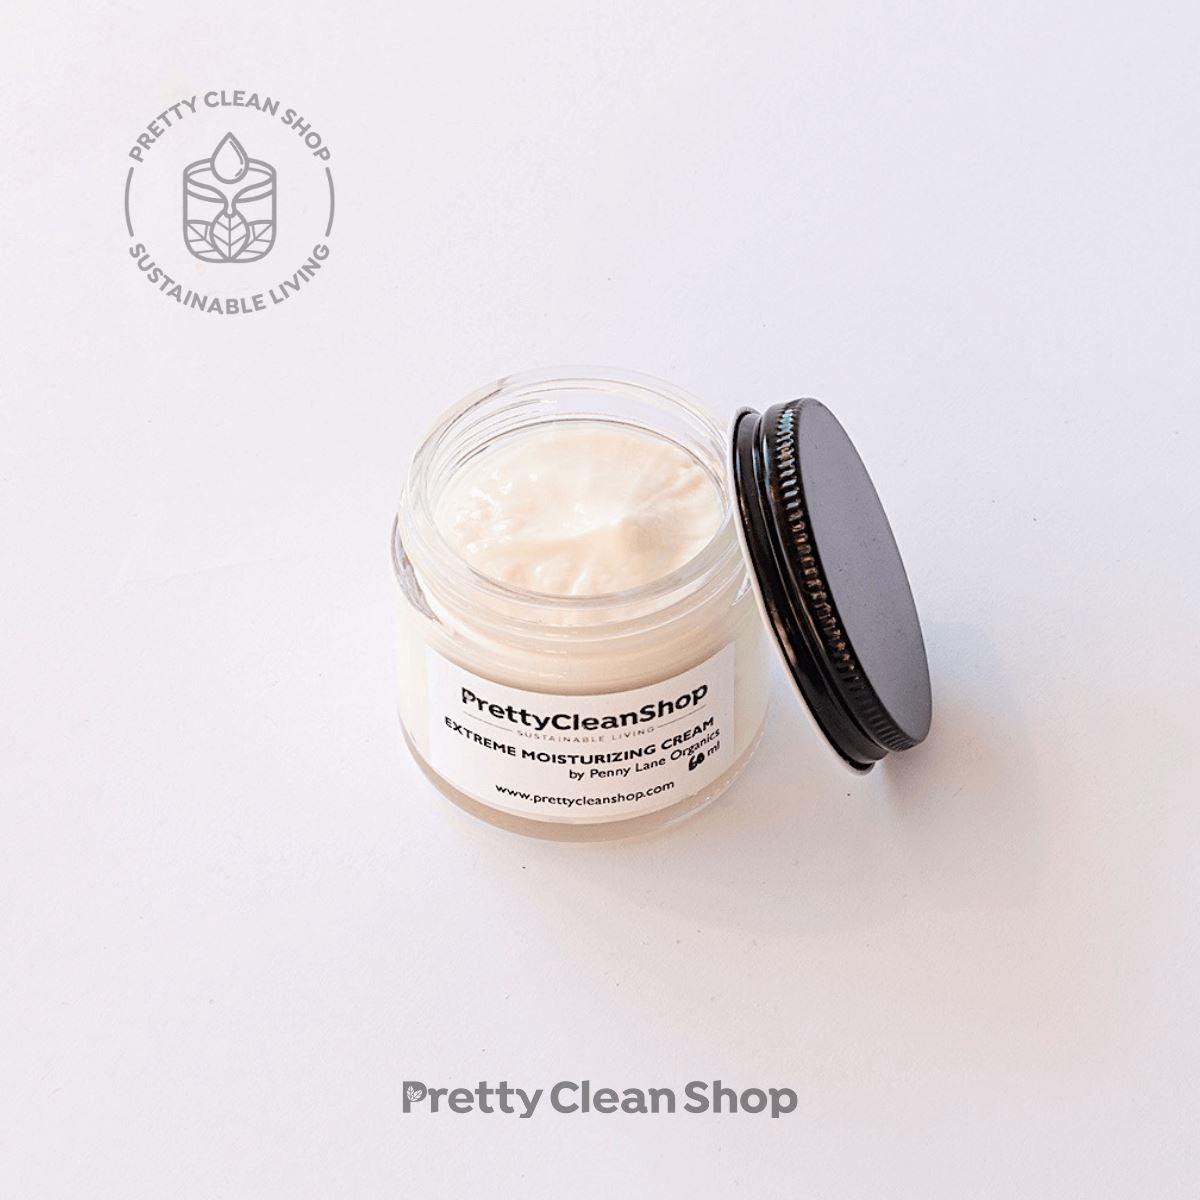 Extreme Moisturizing Cream Skincare Penny Lane Organics Prettycleanshop